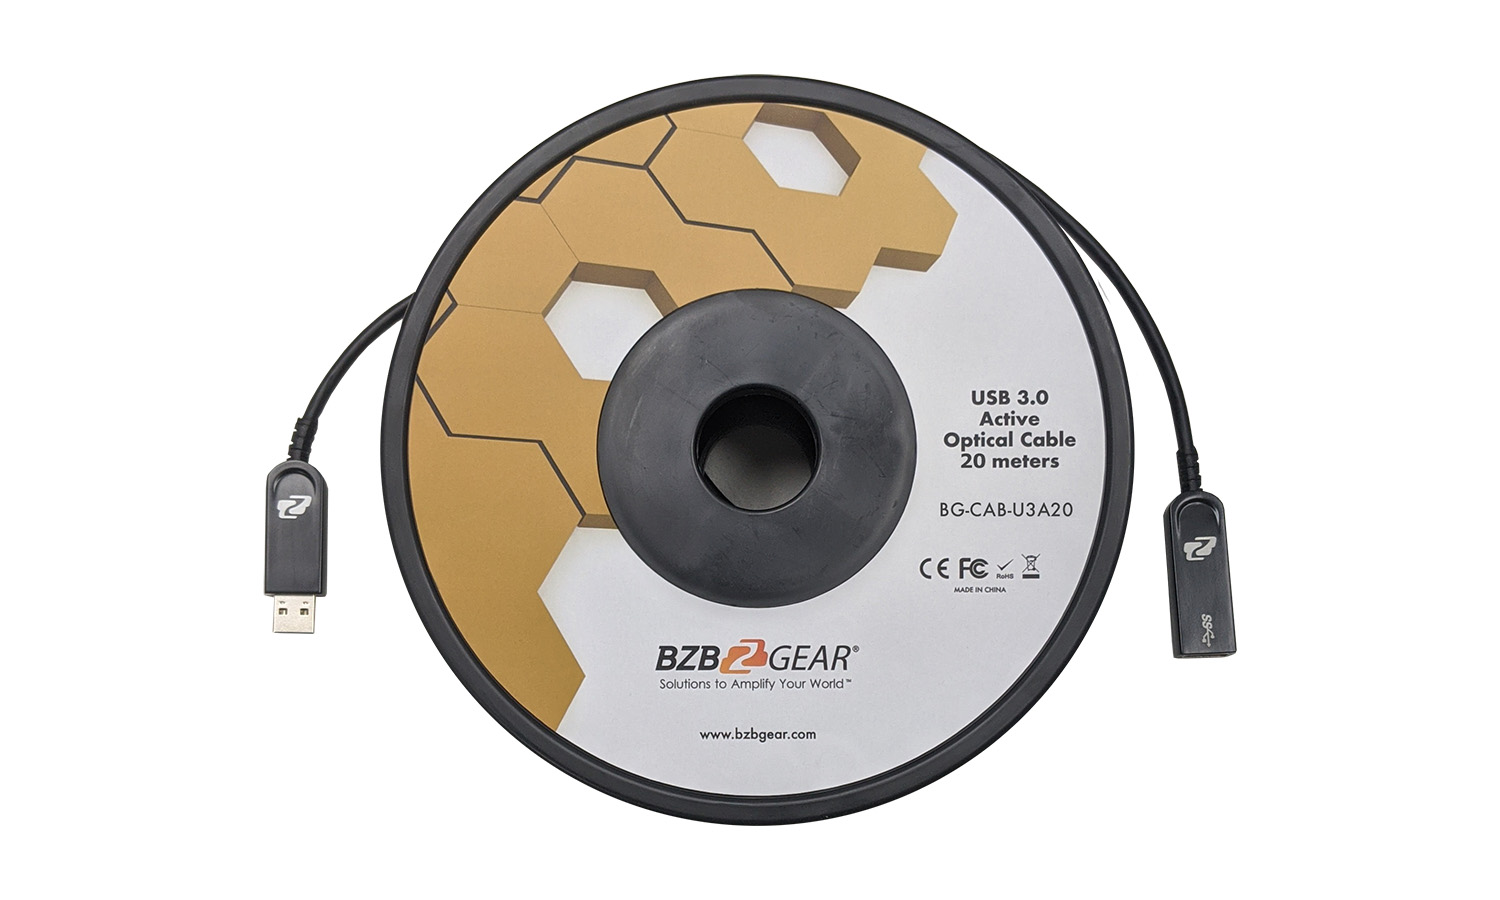 BG-CAB-U3A20 USB 3.0 AM/AF Active Optical Extension Cable - 20m/66ft by BZBGEAR